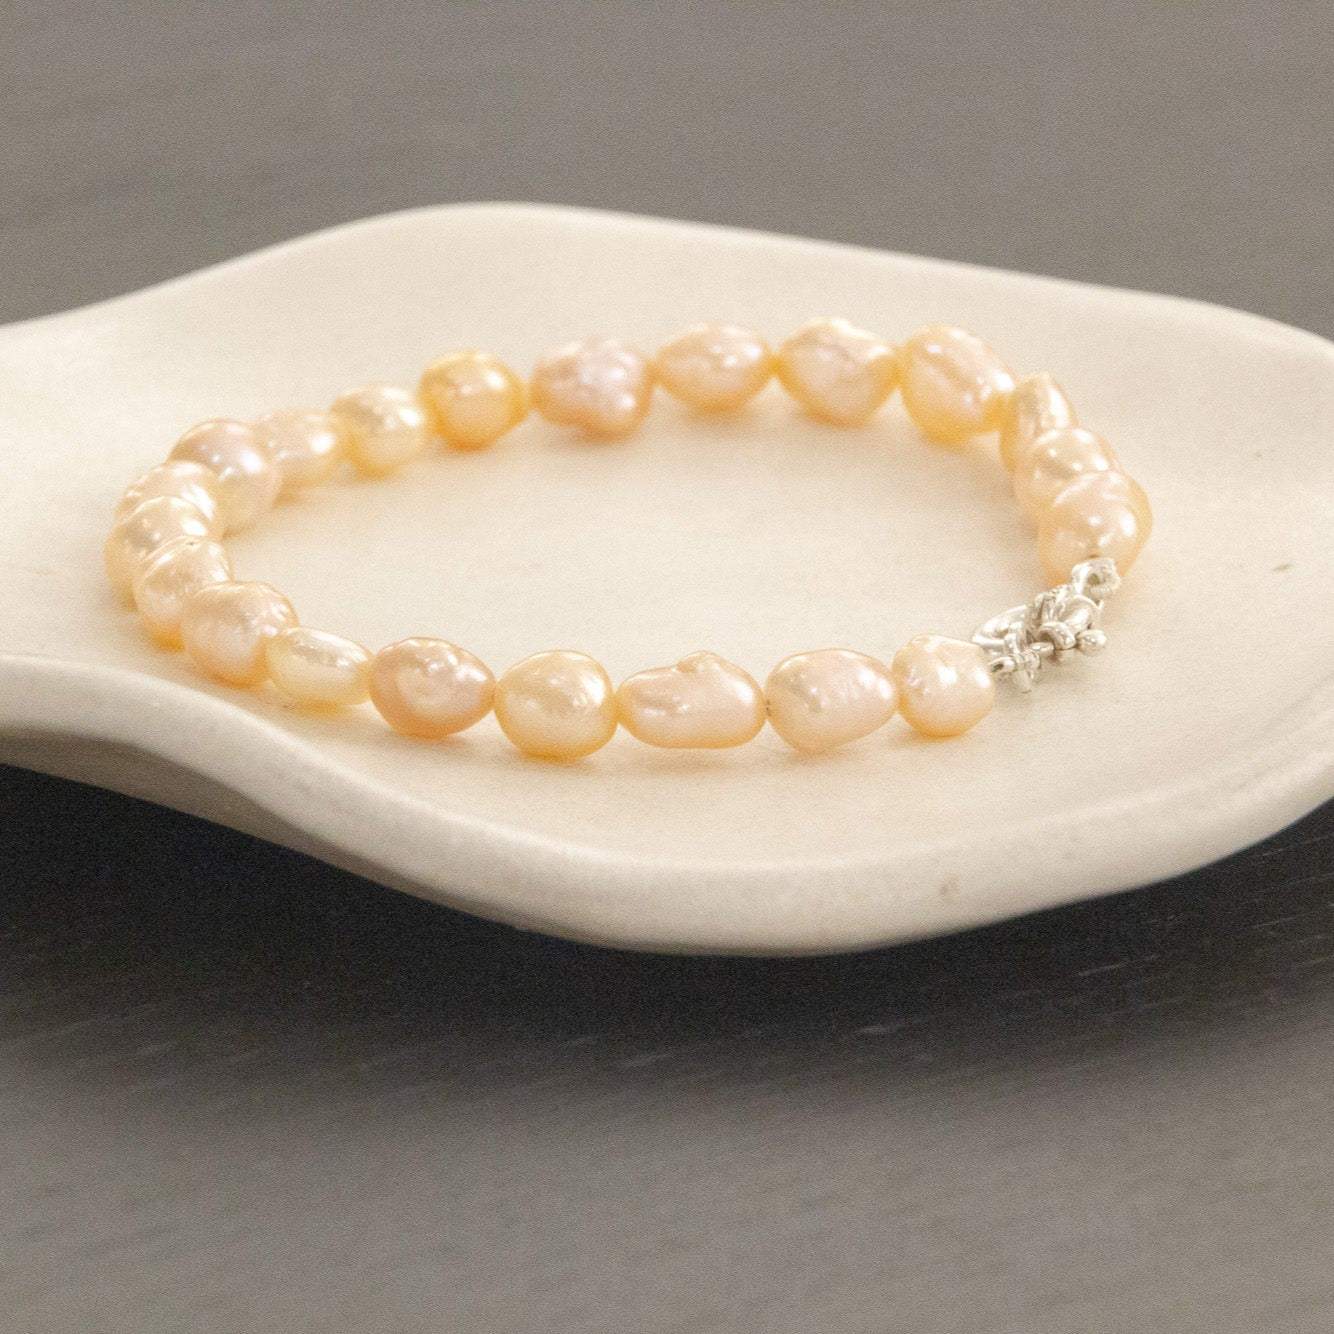 Peach pearl bracelet